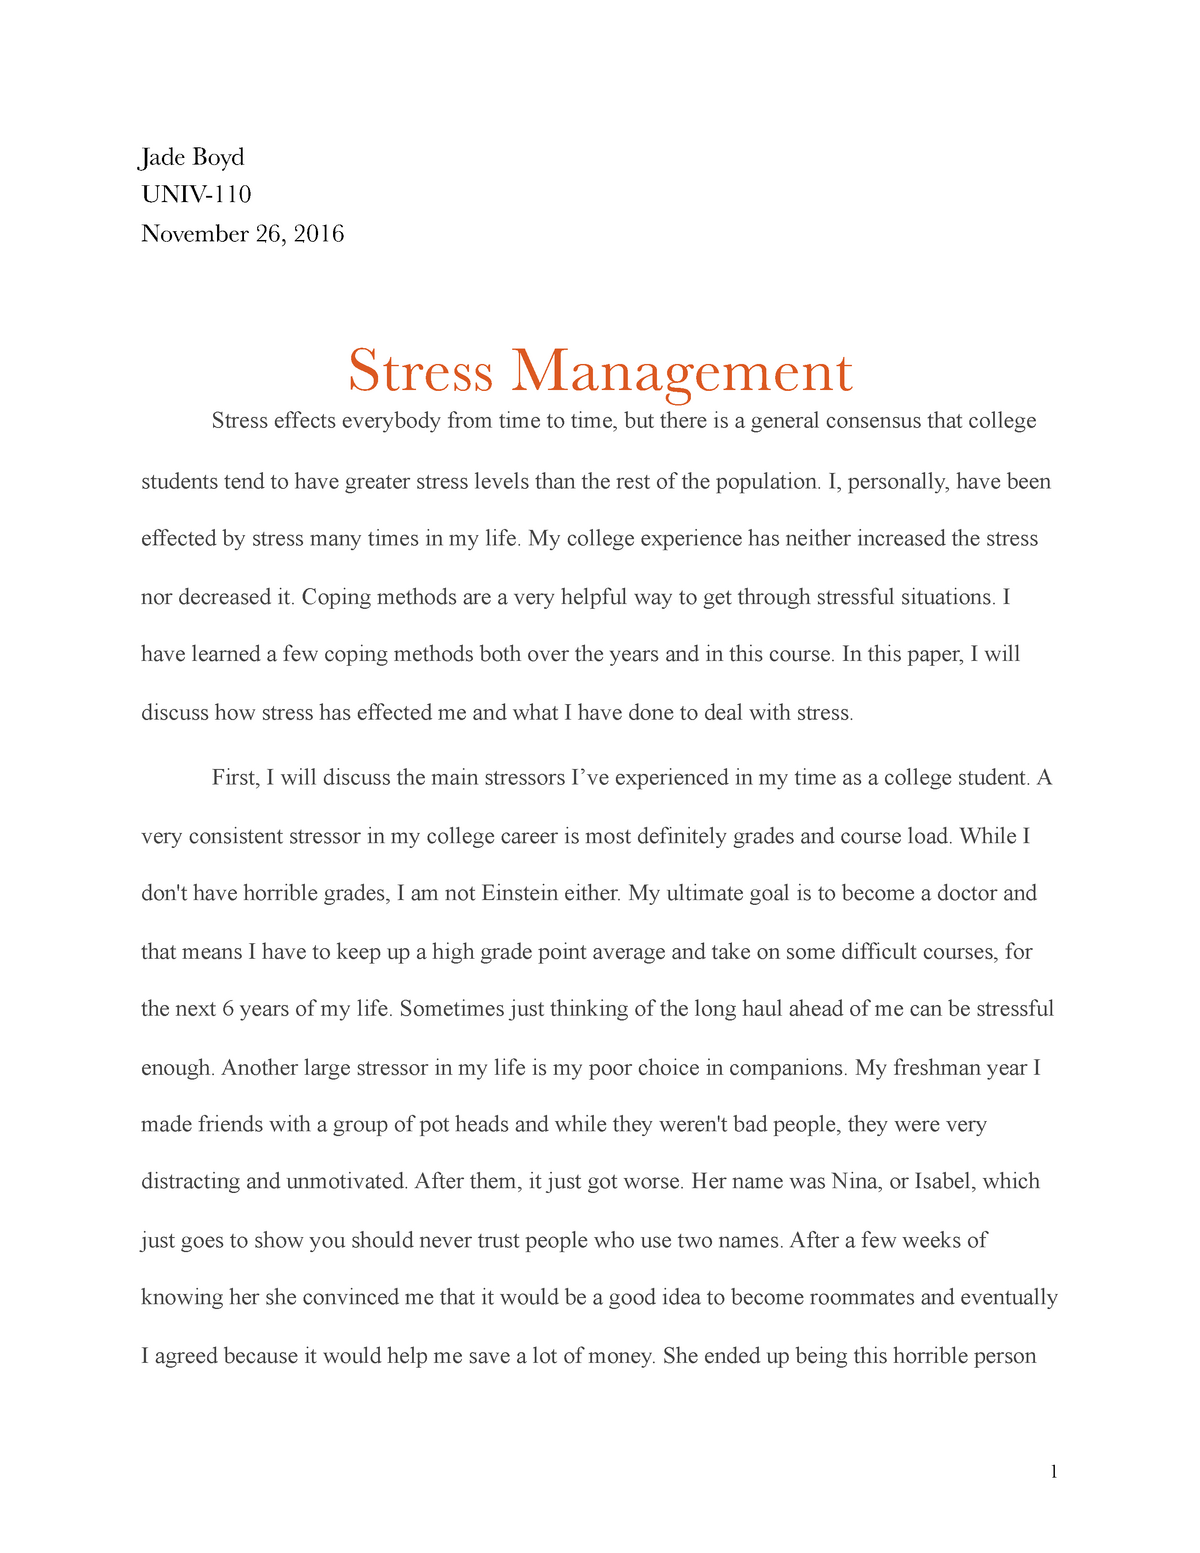 title for stress management essay